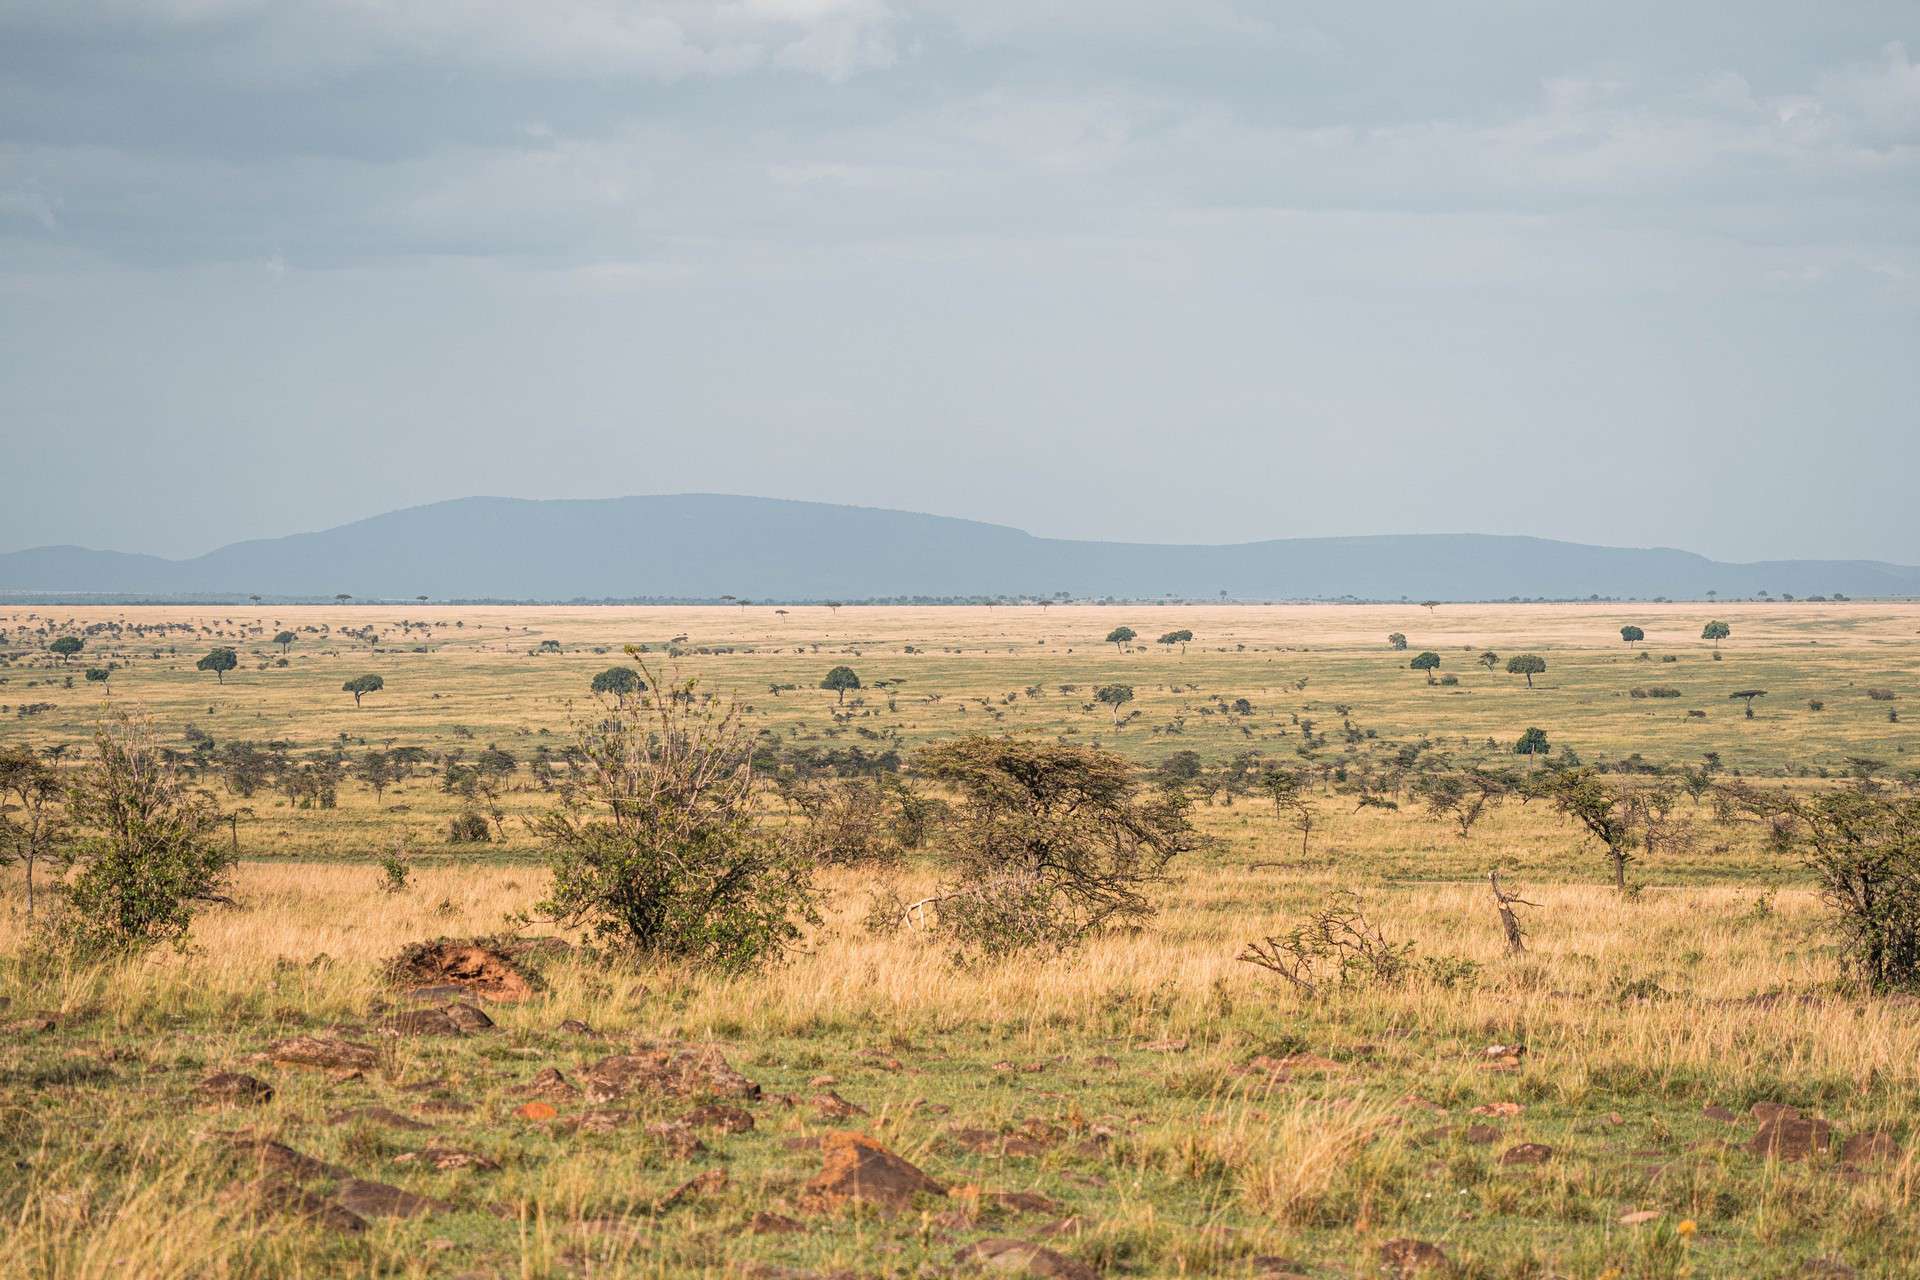 Plains at Karen Blixen Lodge, Kenya. The Masai Mara